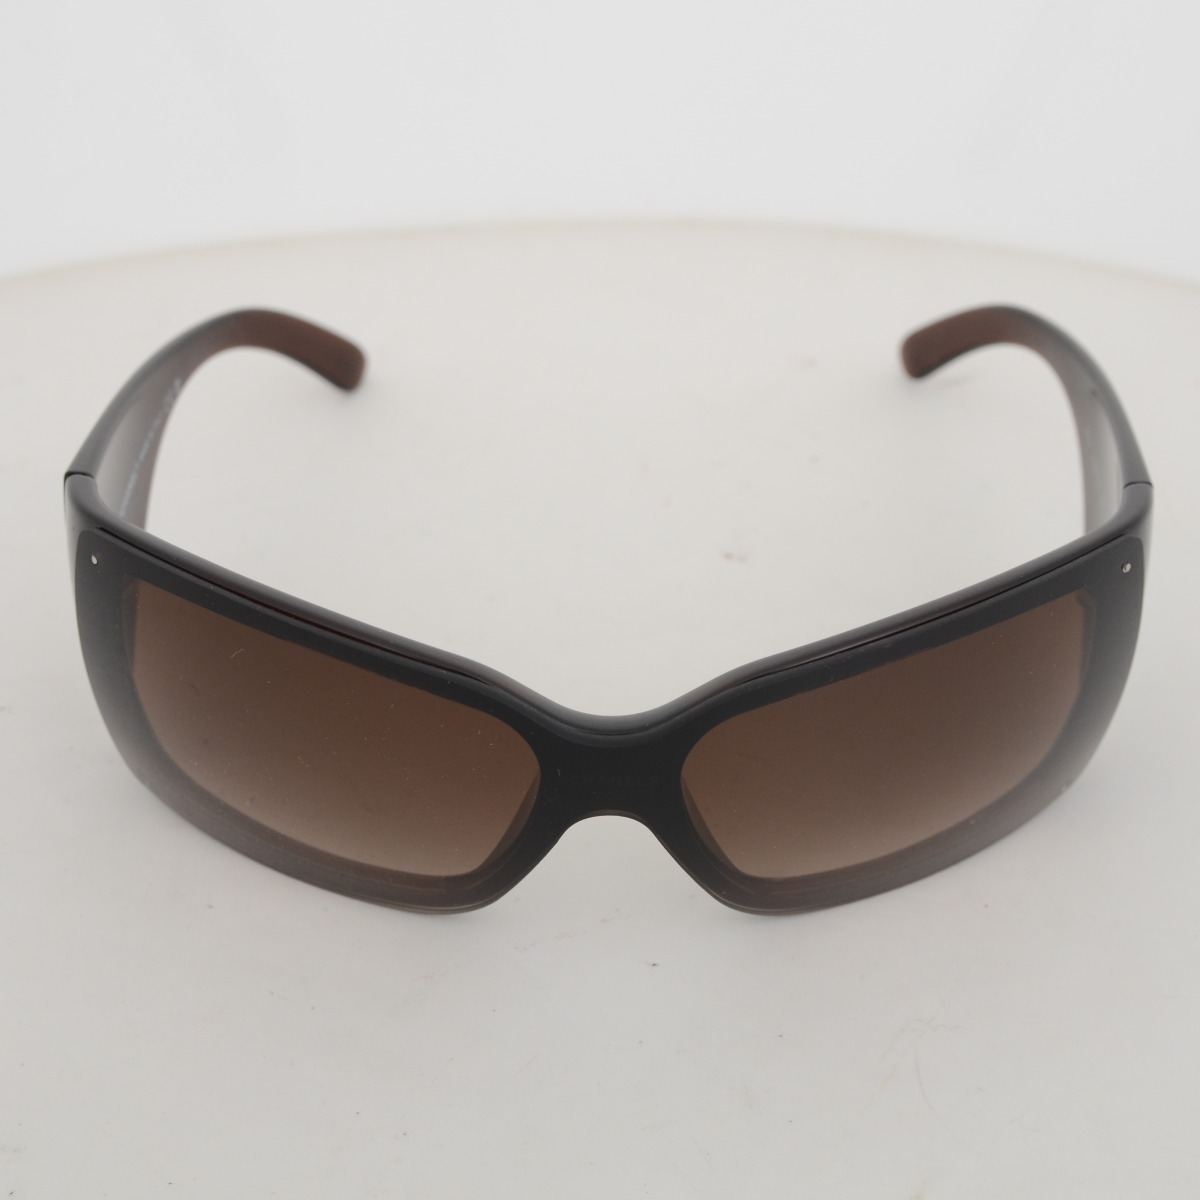 Chanel 6012 C.538/13 110 sunglasses : Real Yahoo auction salling